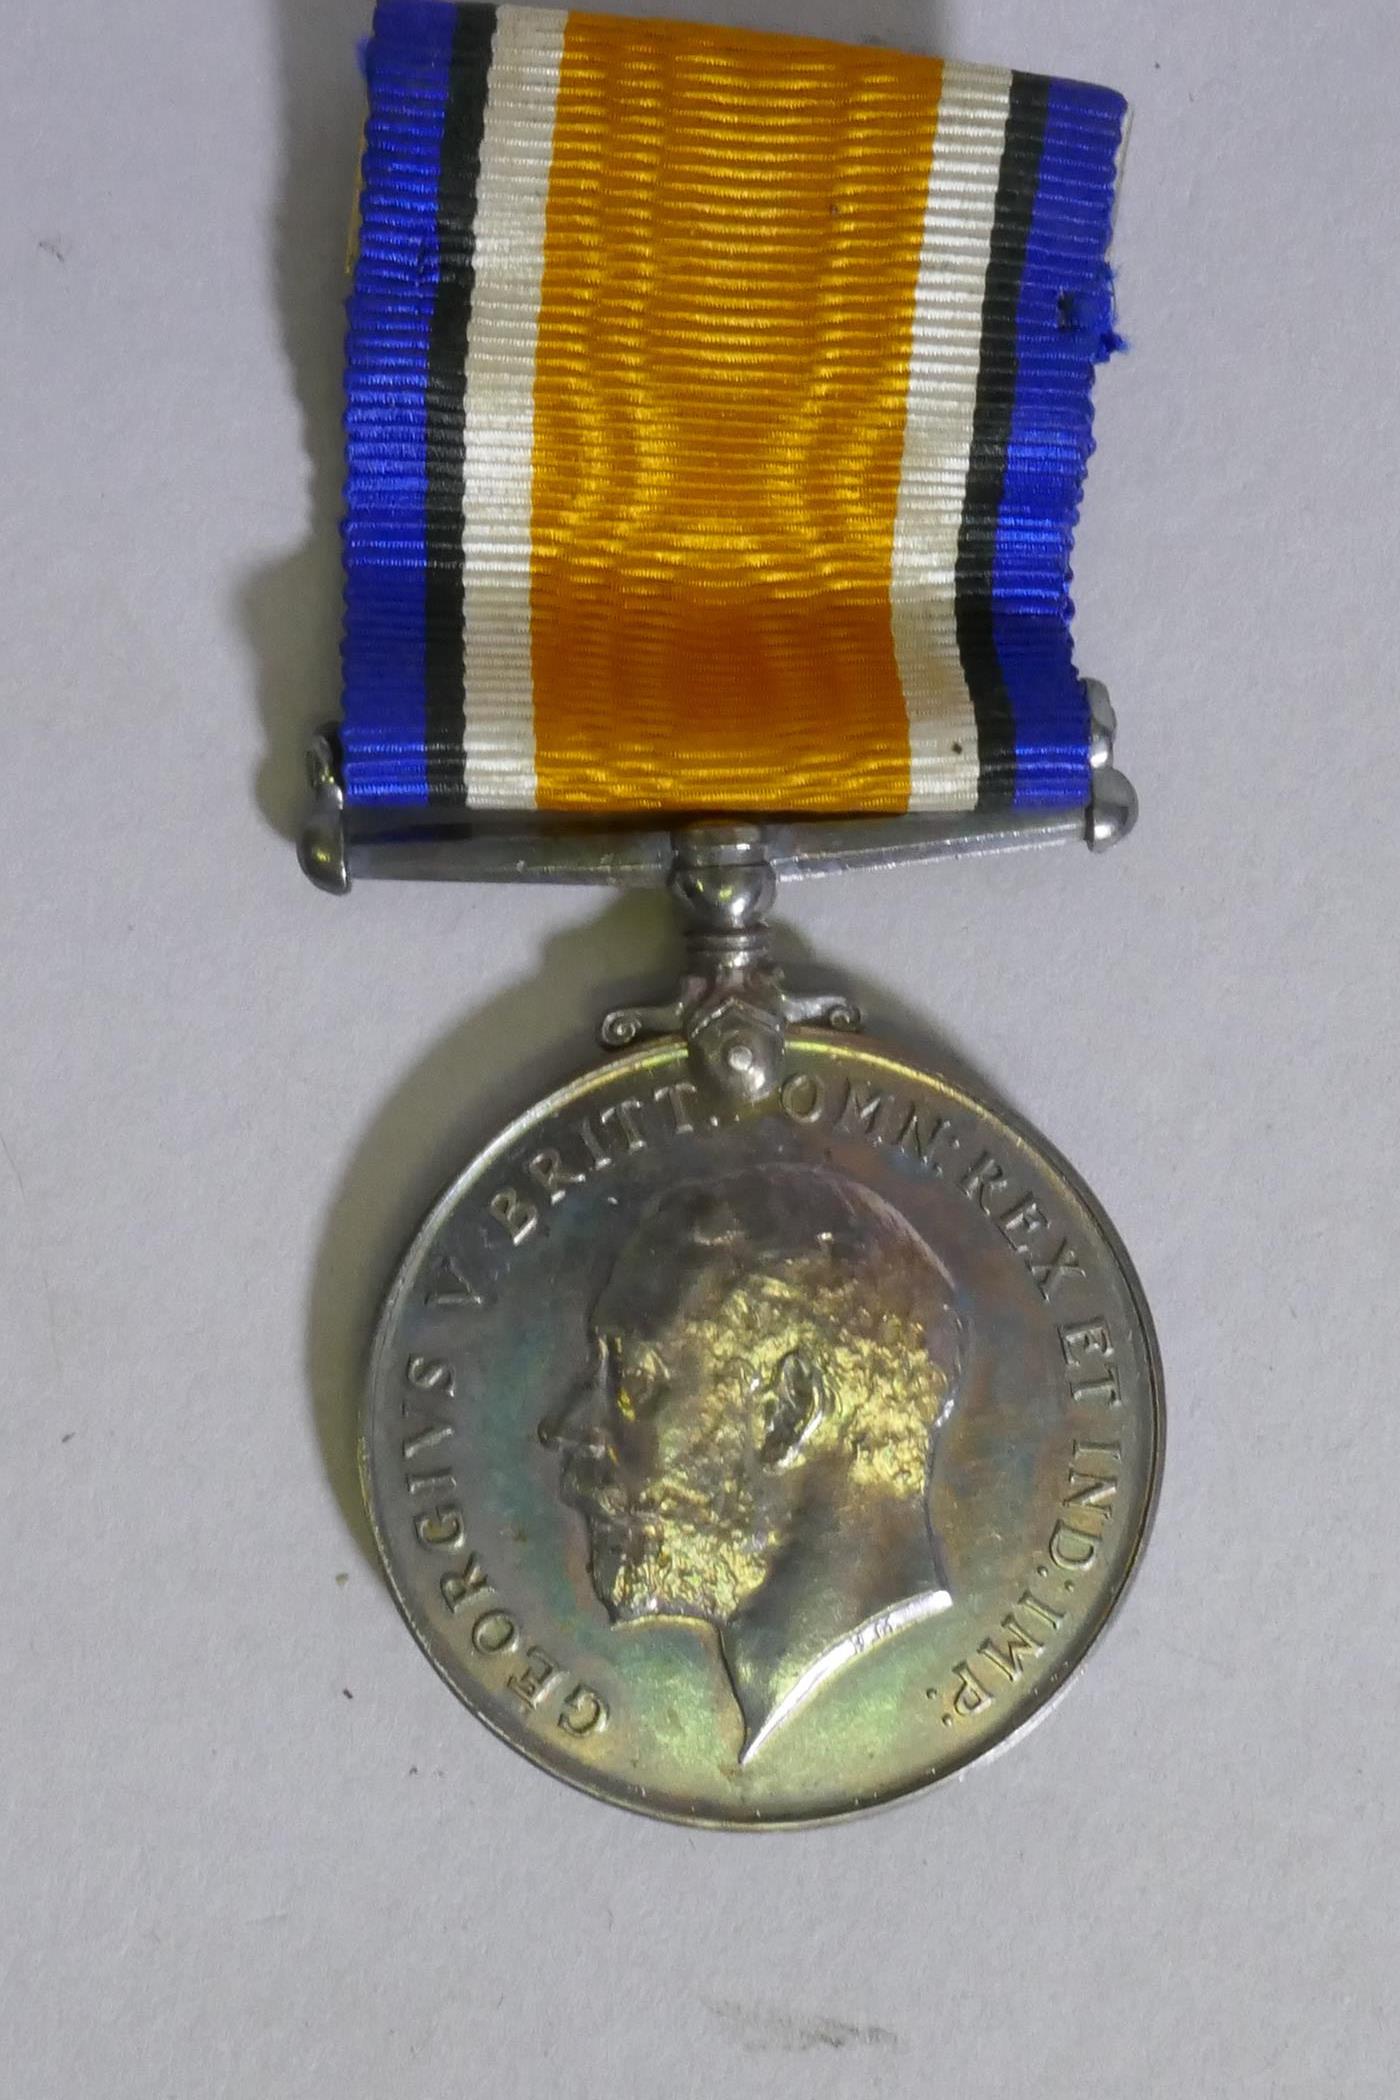 WWI campaign medal, awarded to Schlmr. Lt. F. Bush R.N.